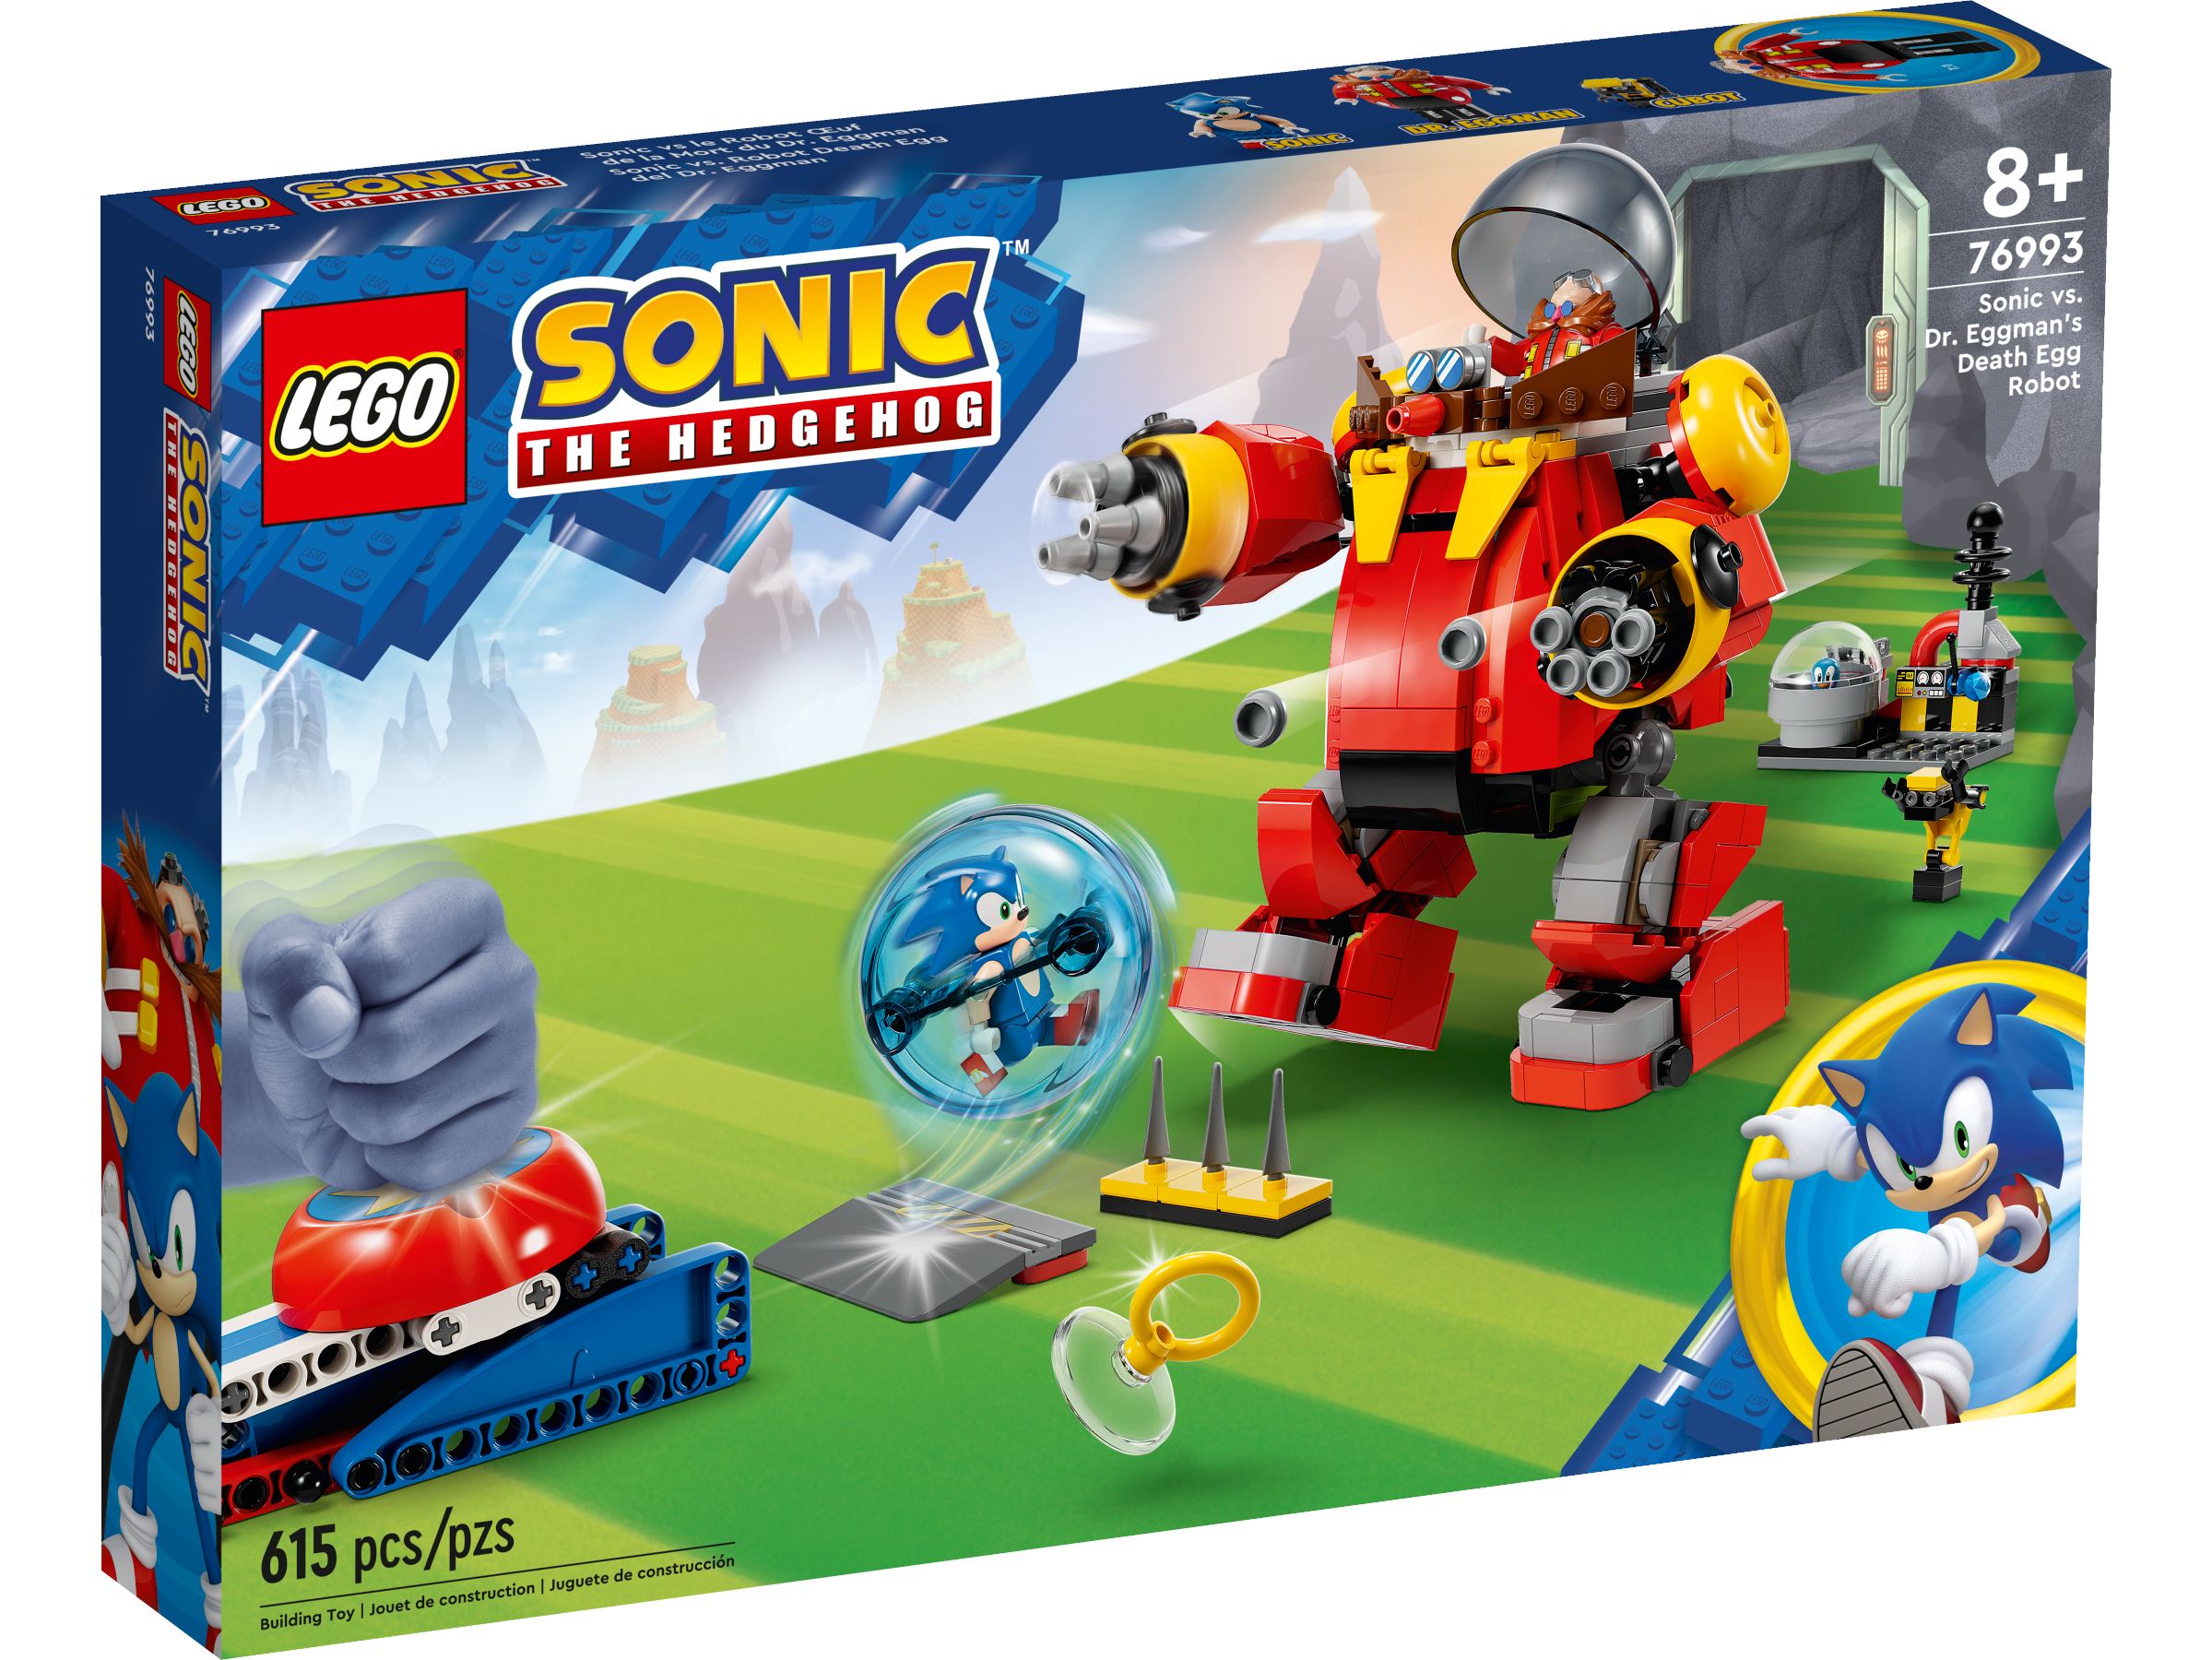 LEGO Sonic the Hedgehog 76993 Sonic vs. Dr. Eggmans Death Egg Robot LEGO_76993_Box1_v39.jpg